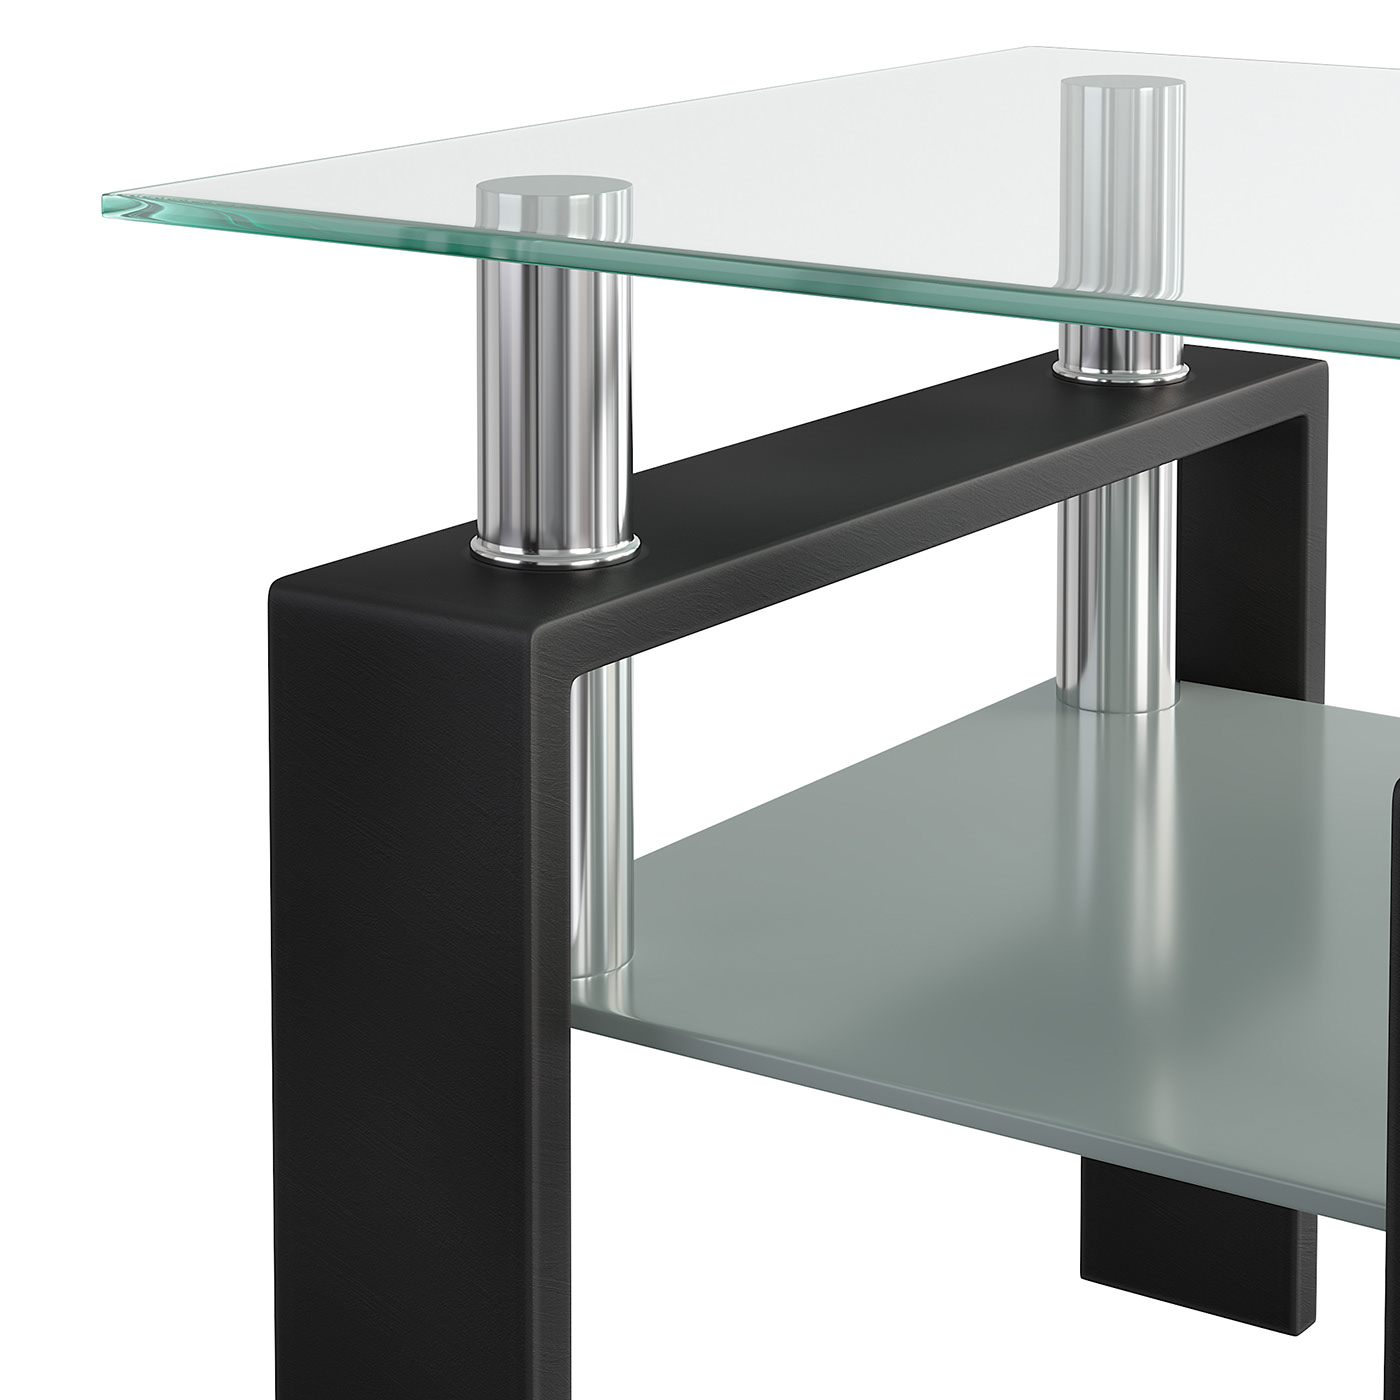 3d modeling 3ds max corona interior design  modern product design  Render side table